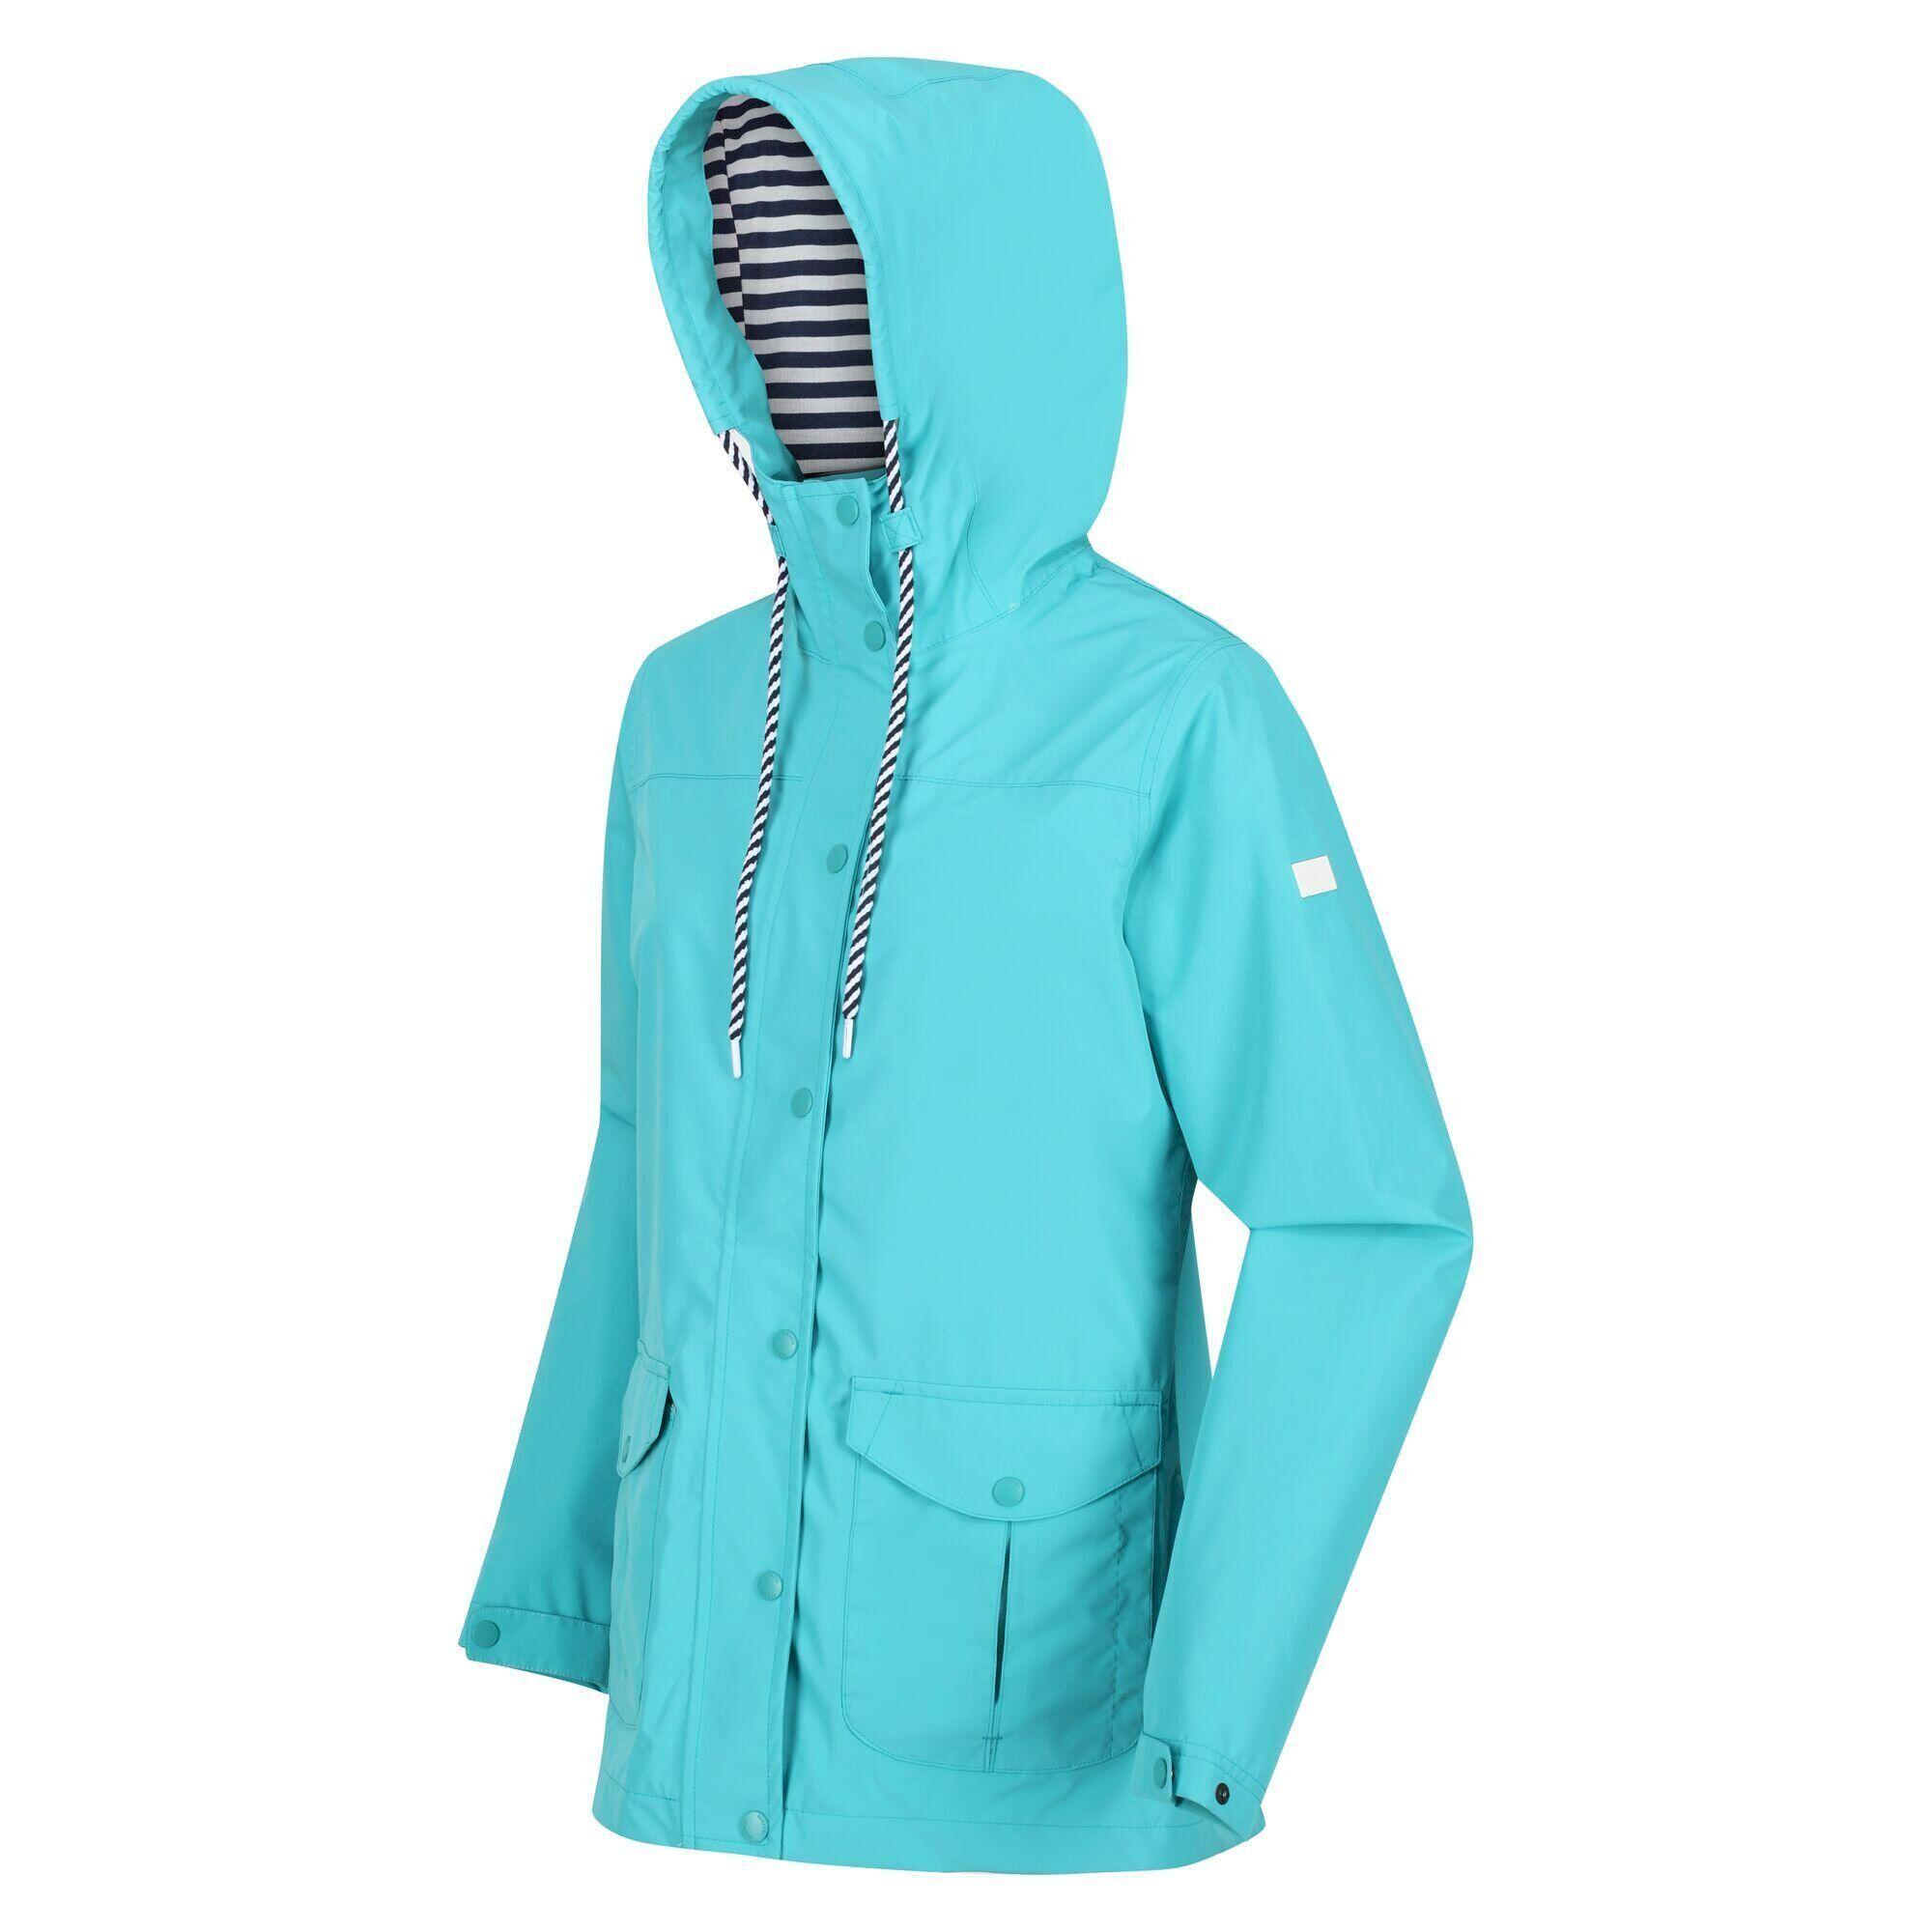 Womens/Ladies Bayarma Lightweight Waterproof Jacket (Turquoise) 4/5